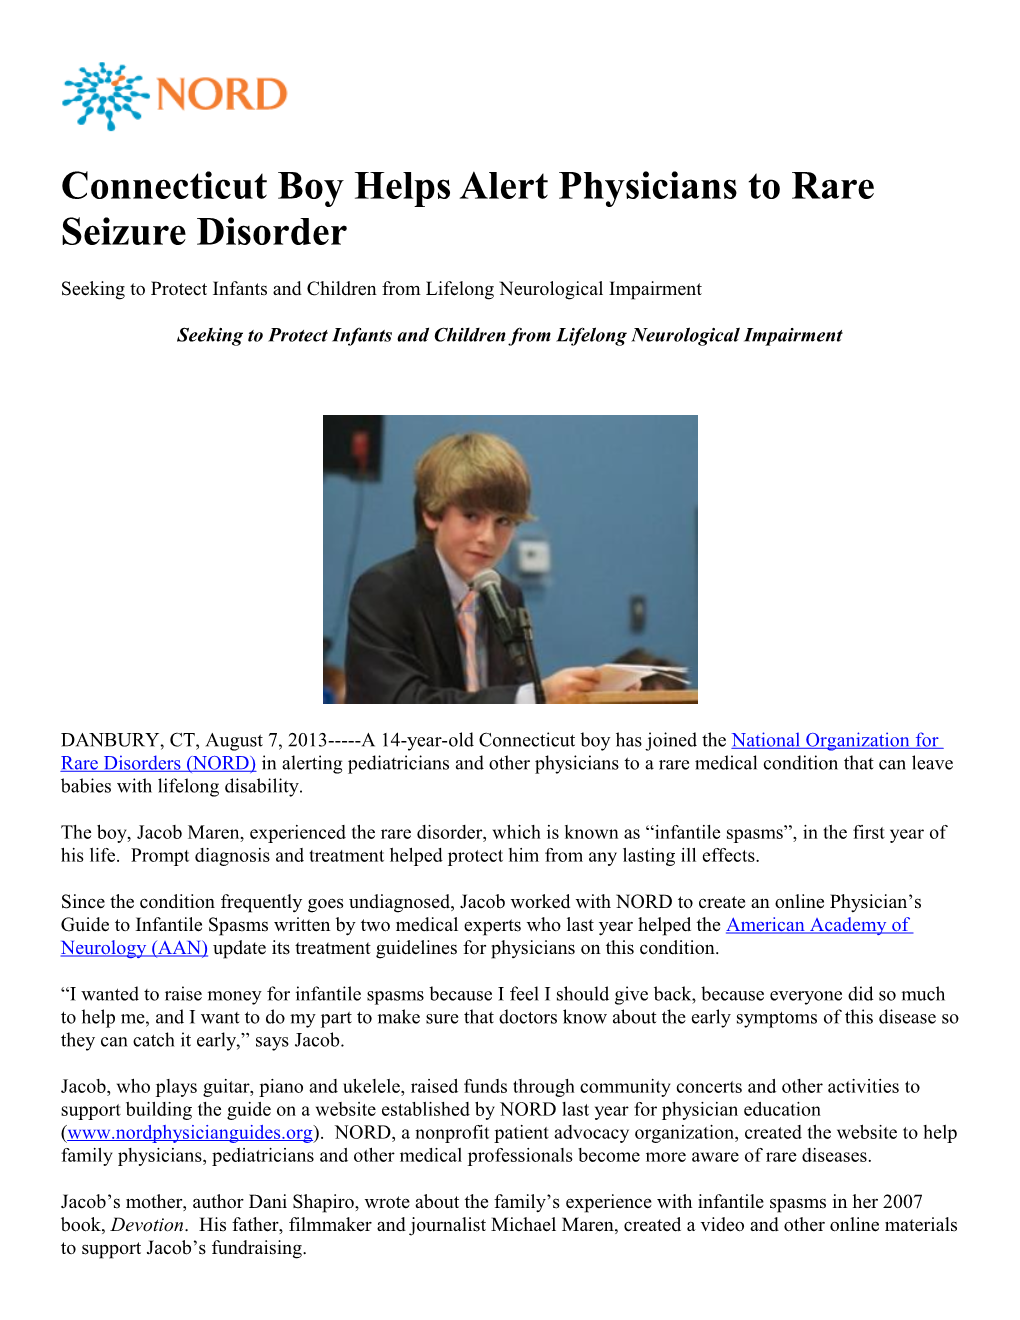 Connecticut Boy Helps Alert Physicians to Rare Seizure Disorder